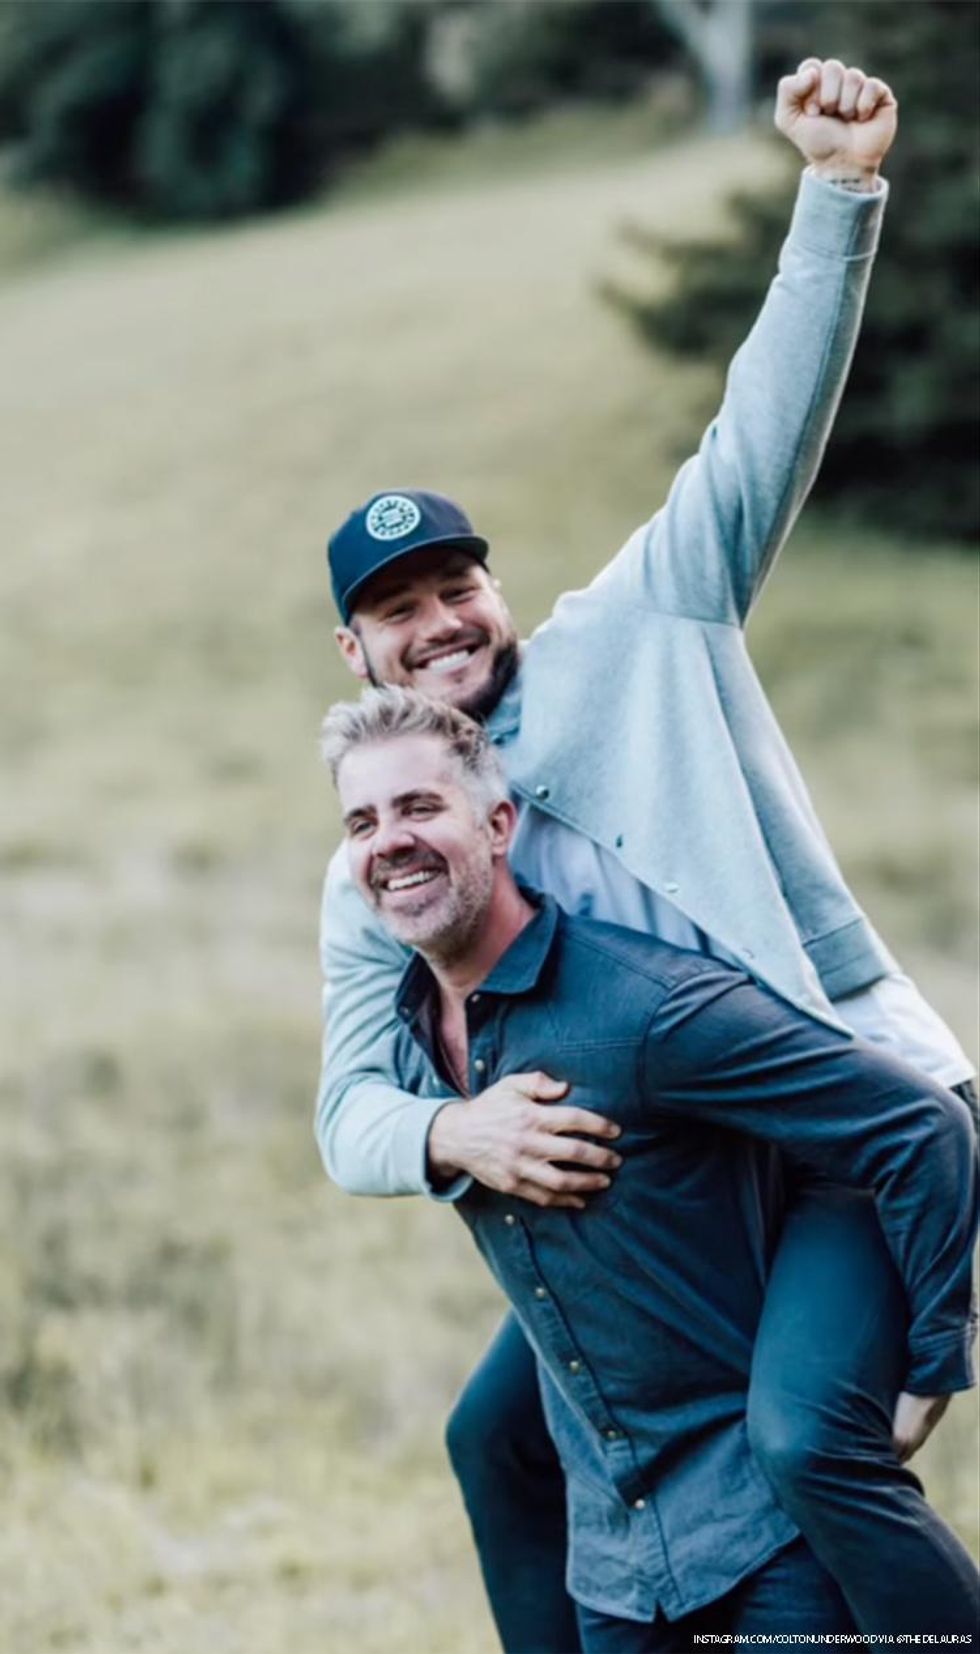 Colton Underwood Shares His Heartwarming Engagement Photos